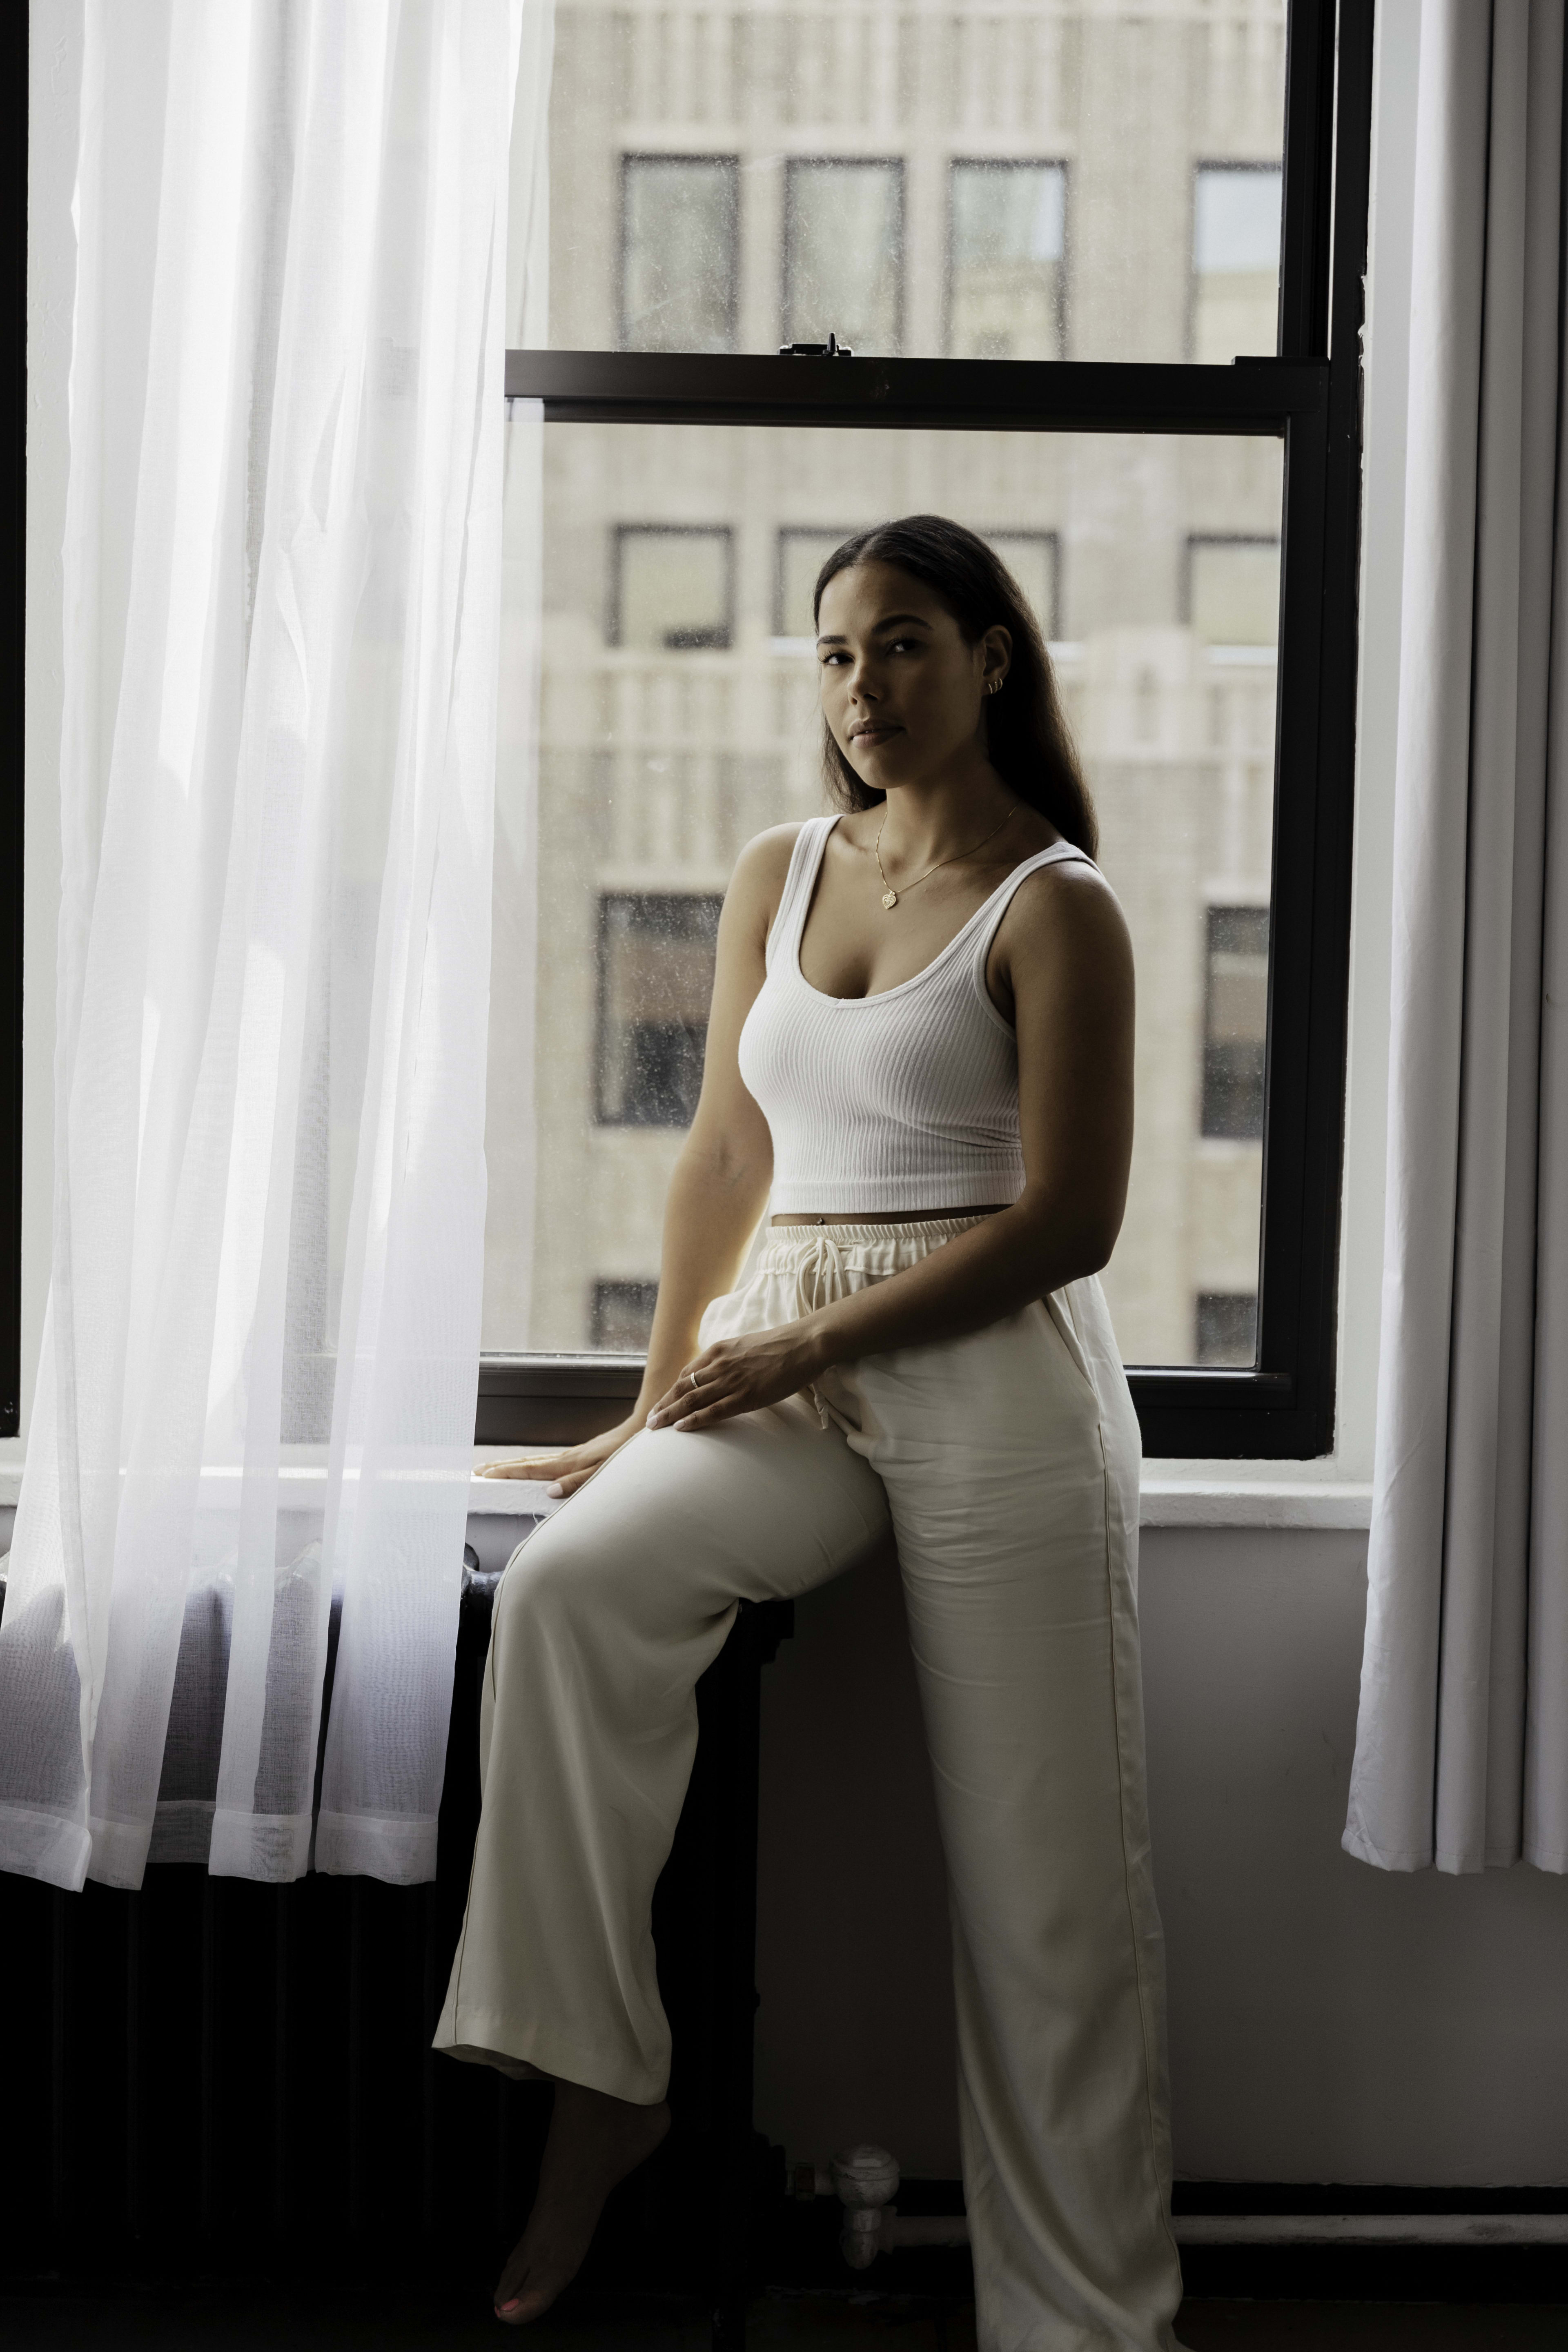 A fashion photo shoot featuring a woman on a minimal white window sill.